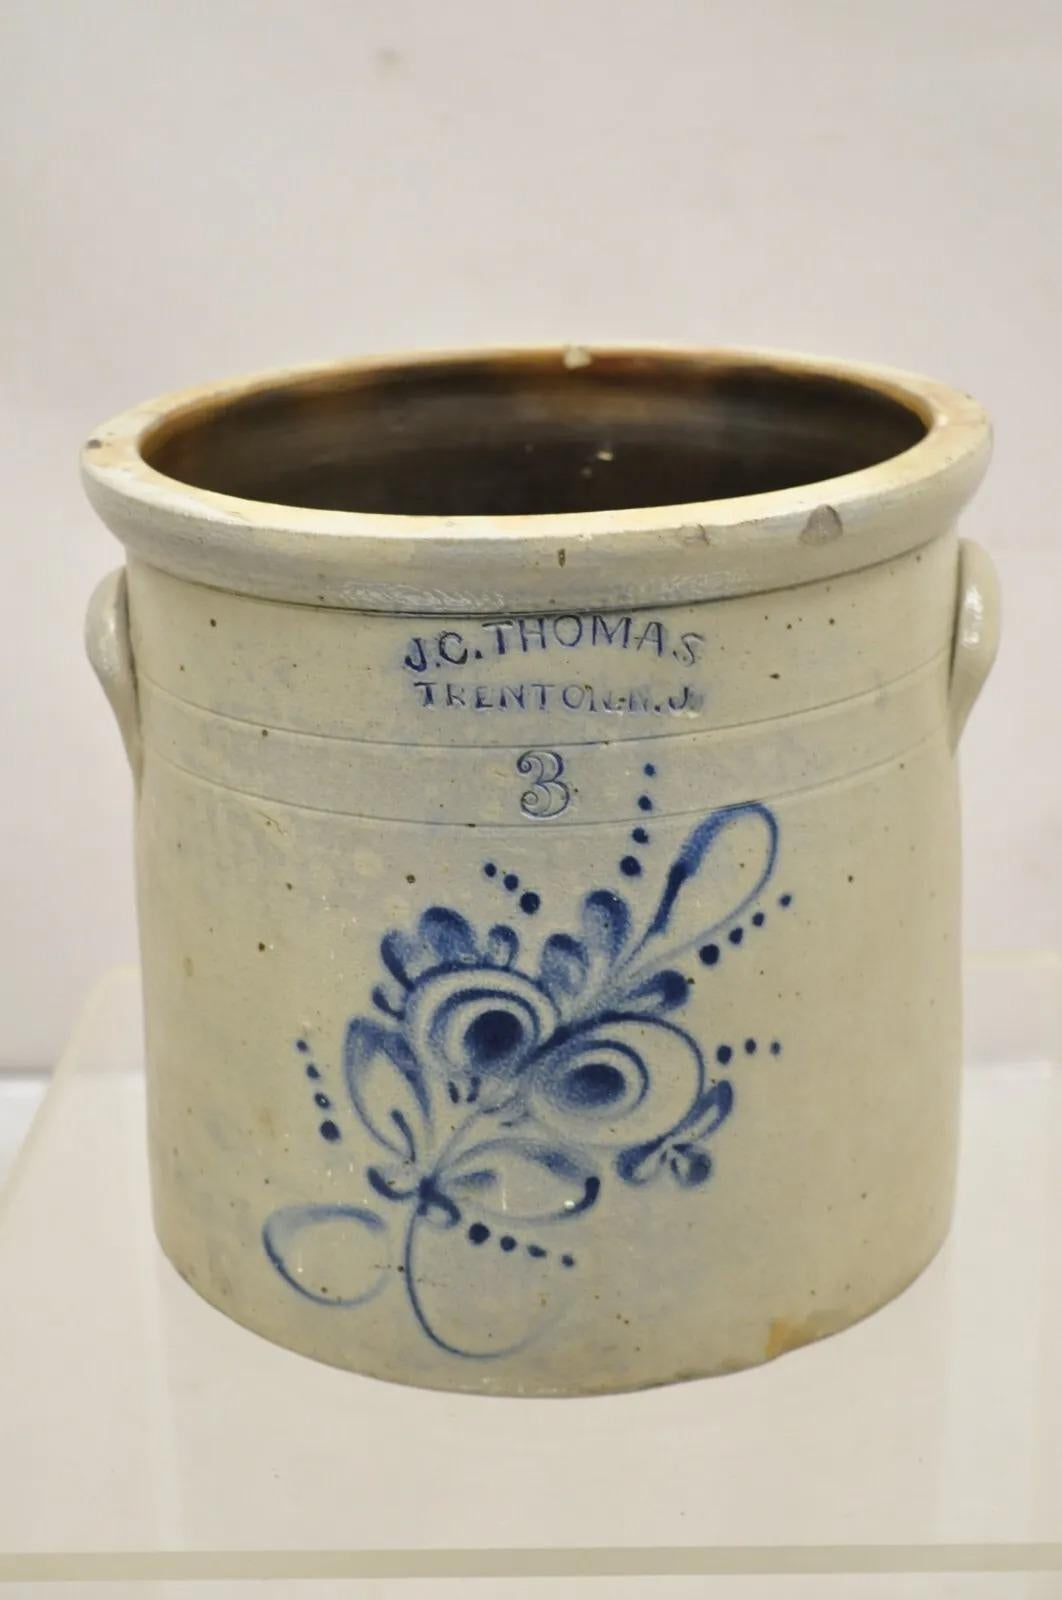 Antique J.C. Thomas Trenton NJ 3 Gallon Stoneware Crock Pot with Cobalt Blue Flower. Circa 19th Century. Measurements: 10.25